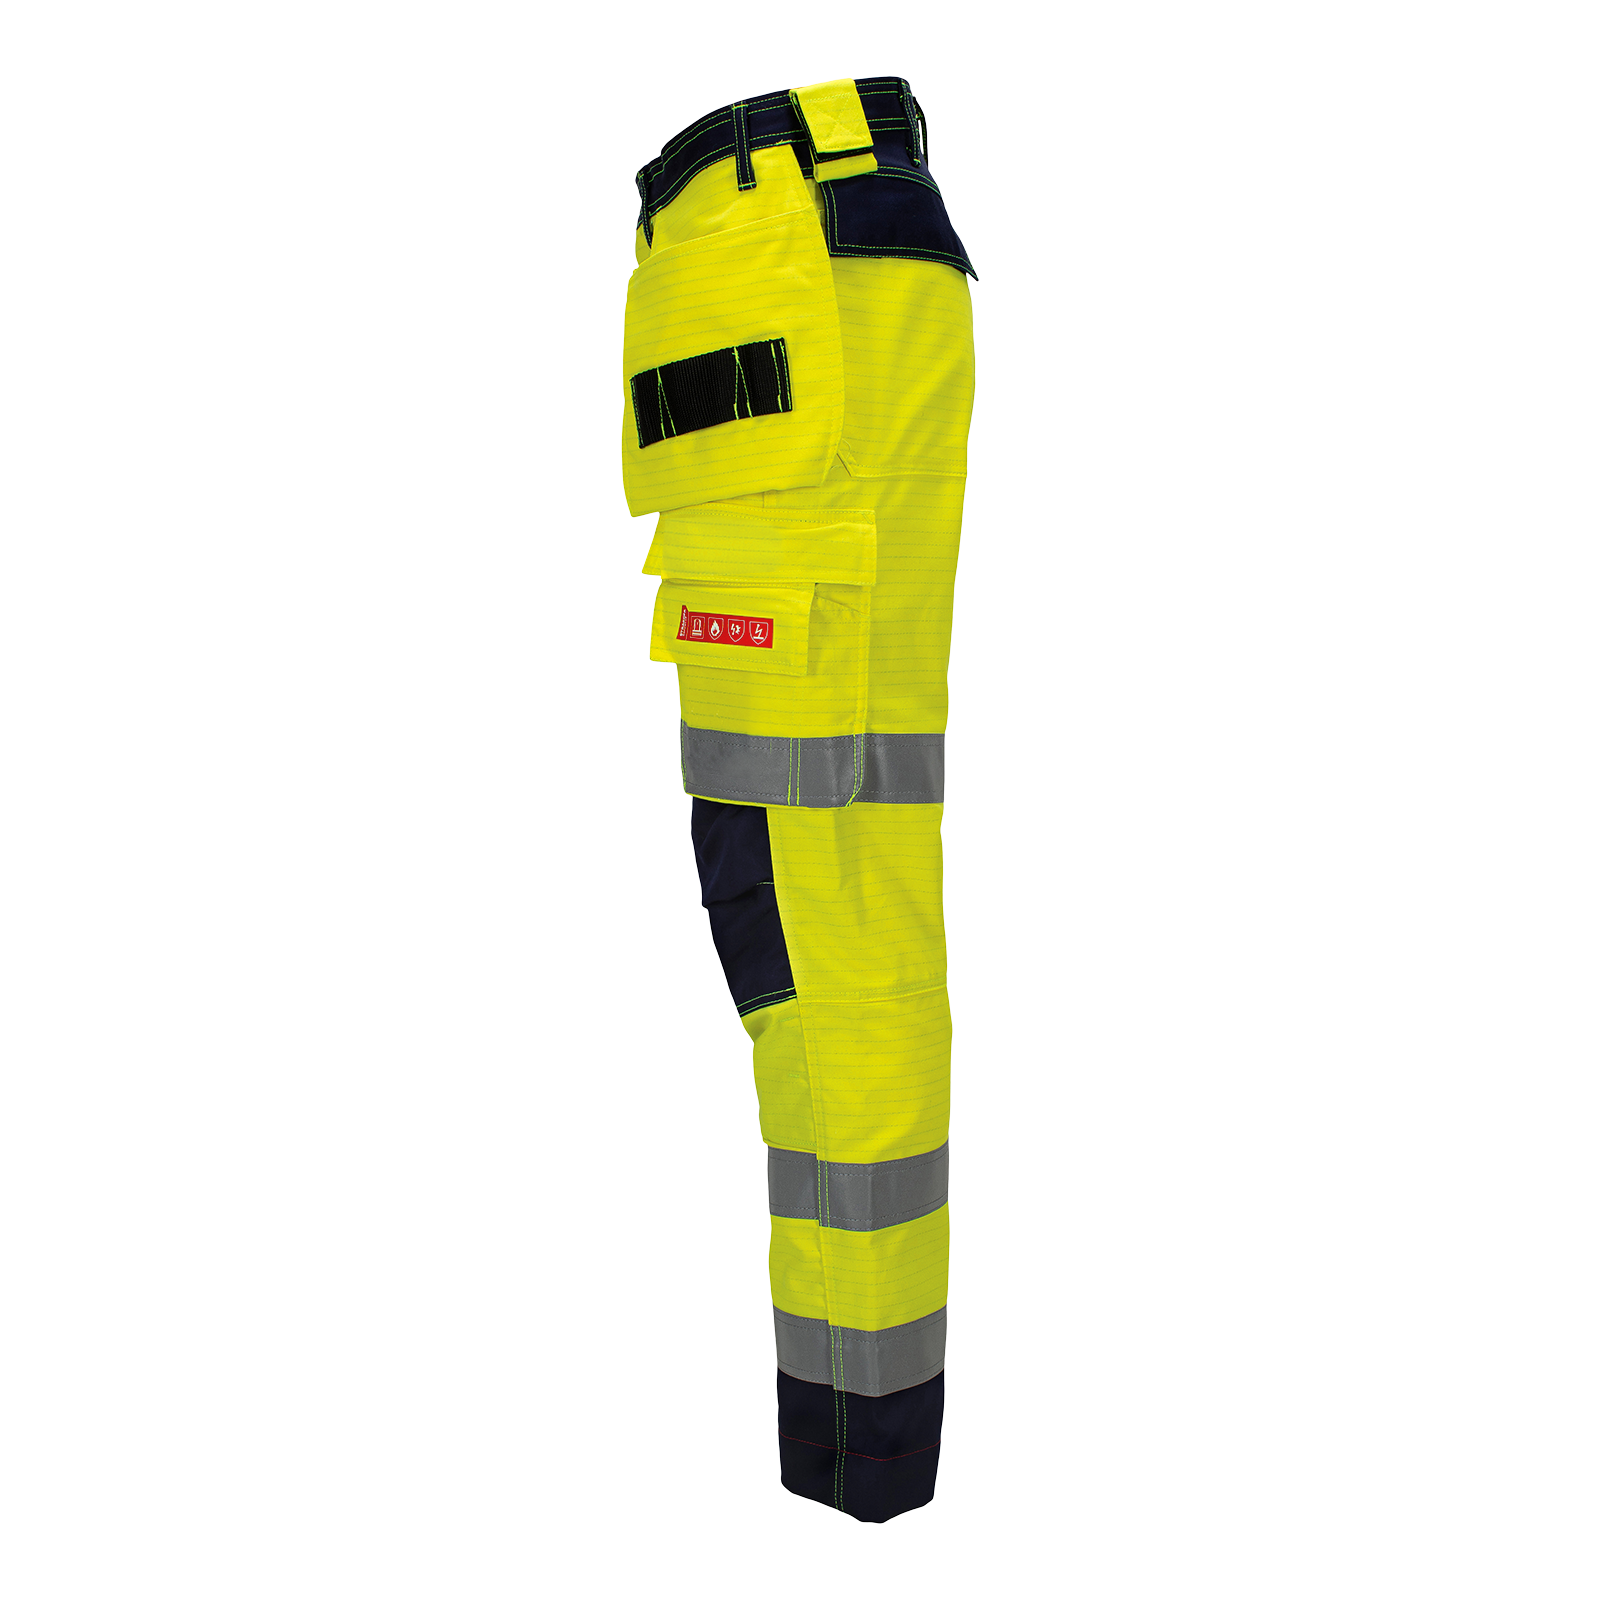 El-line multinorm bukse med verktøylommer, klasse 2